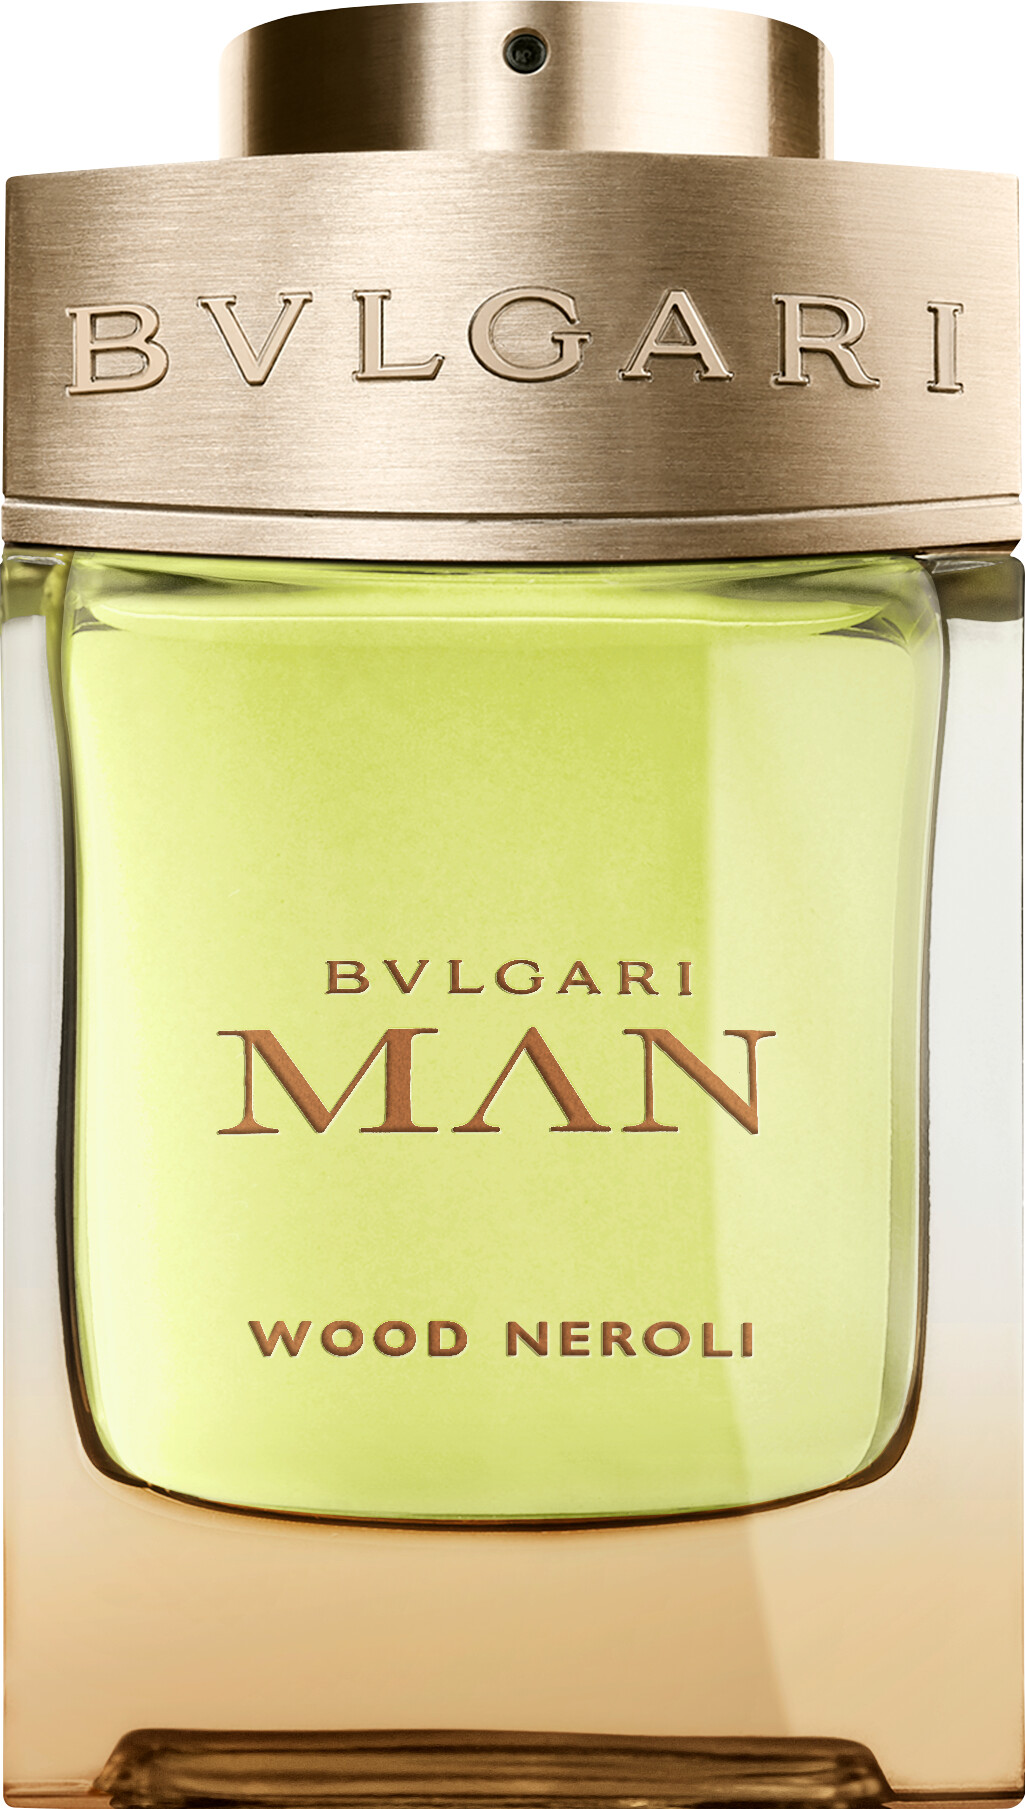 bvlgari wood neroli review